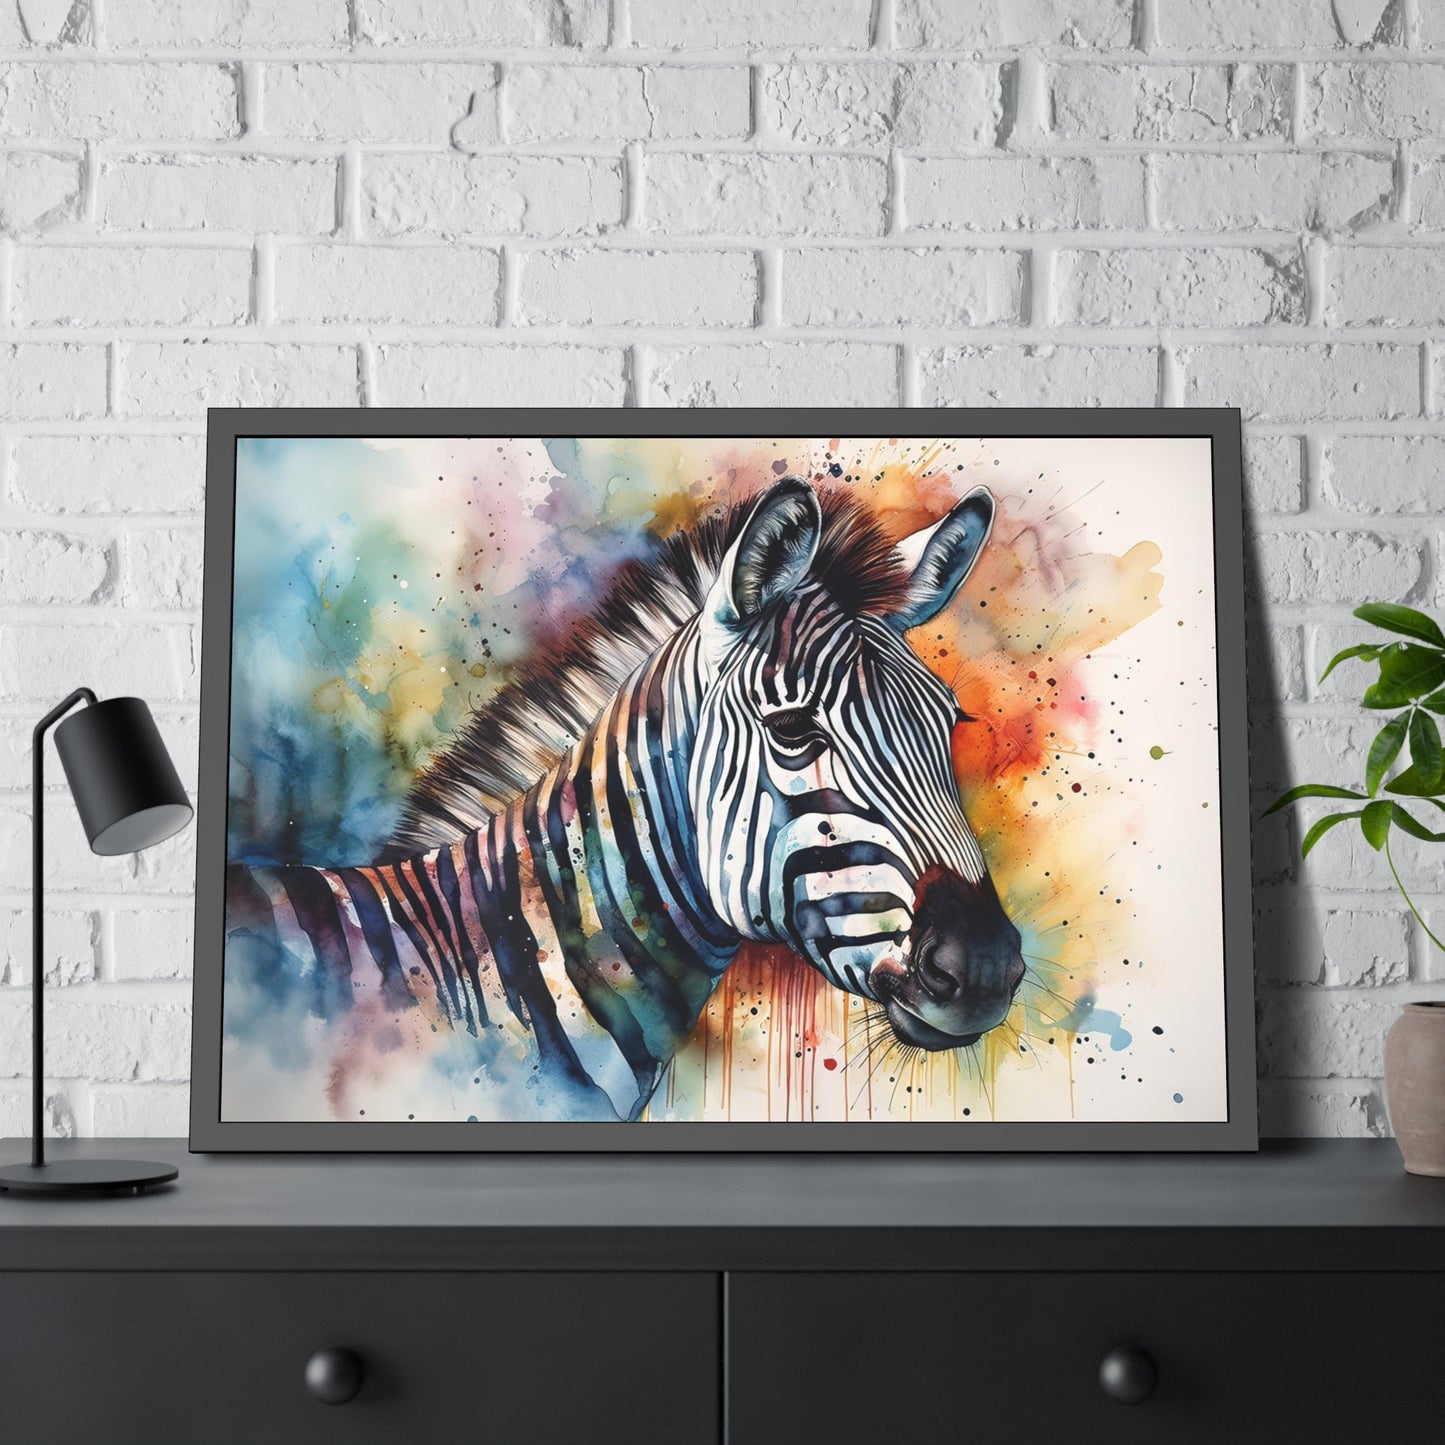 Striking Stripes: Zebra Canvas & Poster Print on a Large Canvas